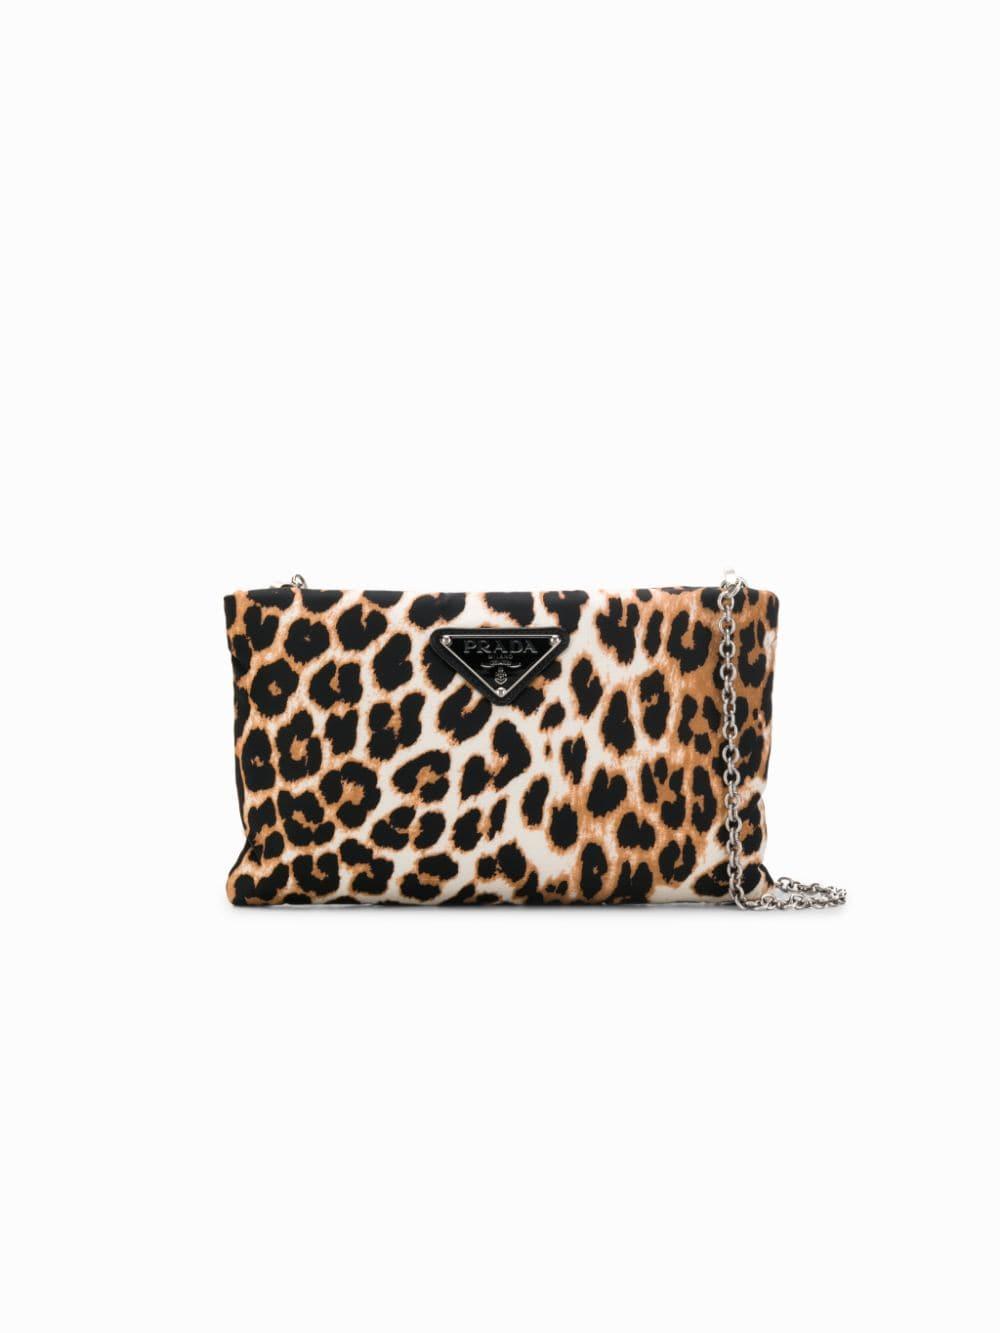 Prada Leopard Print Crossbody Bag in Black | Lyst